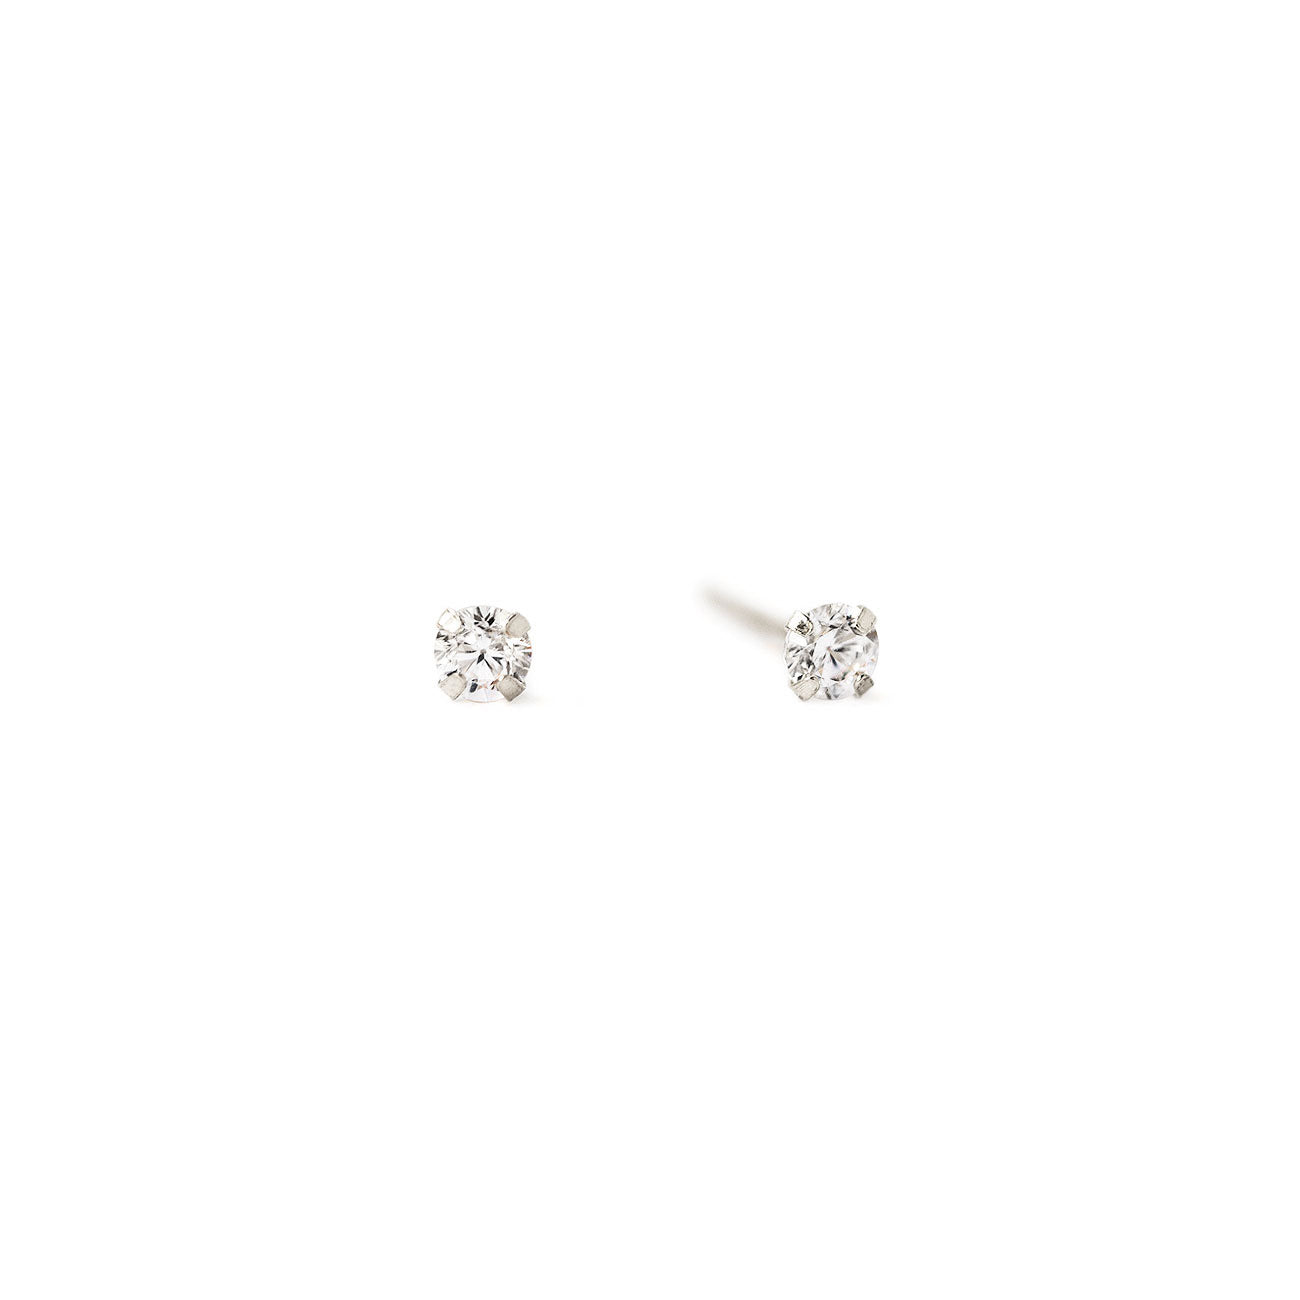 Tiny 14K White Gold Crystal Stud Earrings